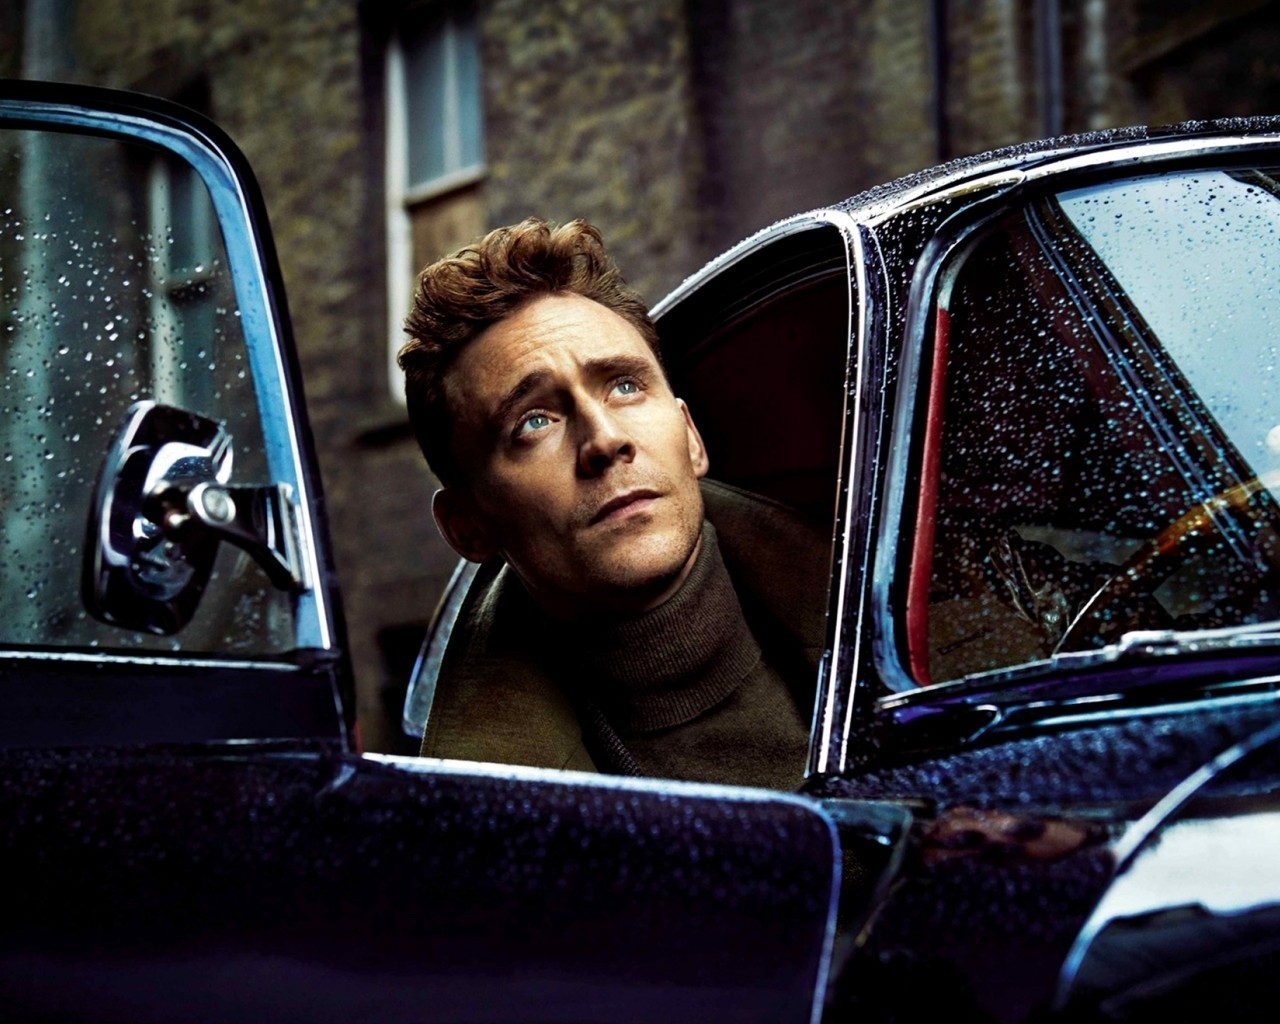 Tom Hiddleston Poster for 1280 x 1024 resolution